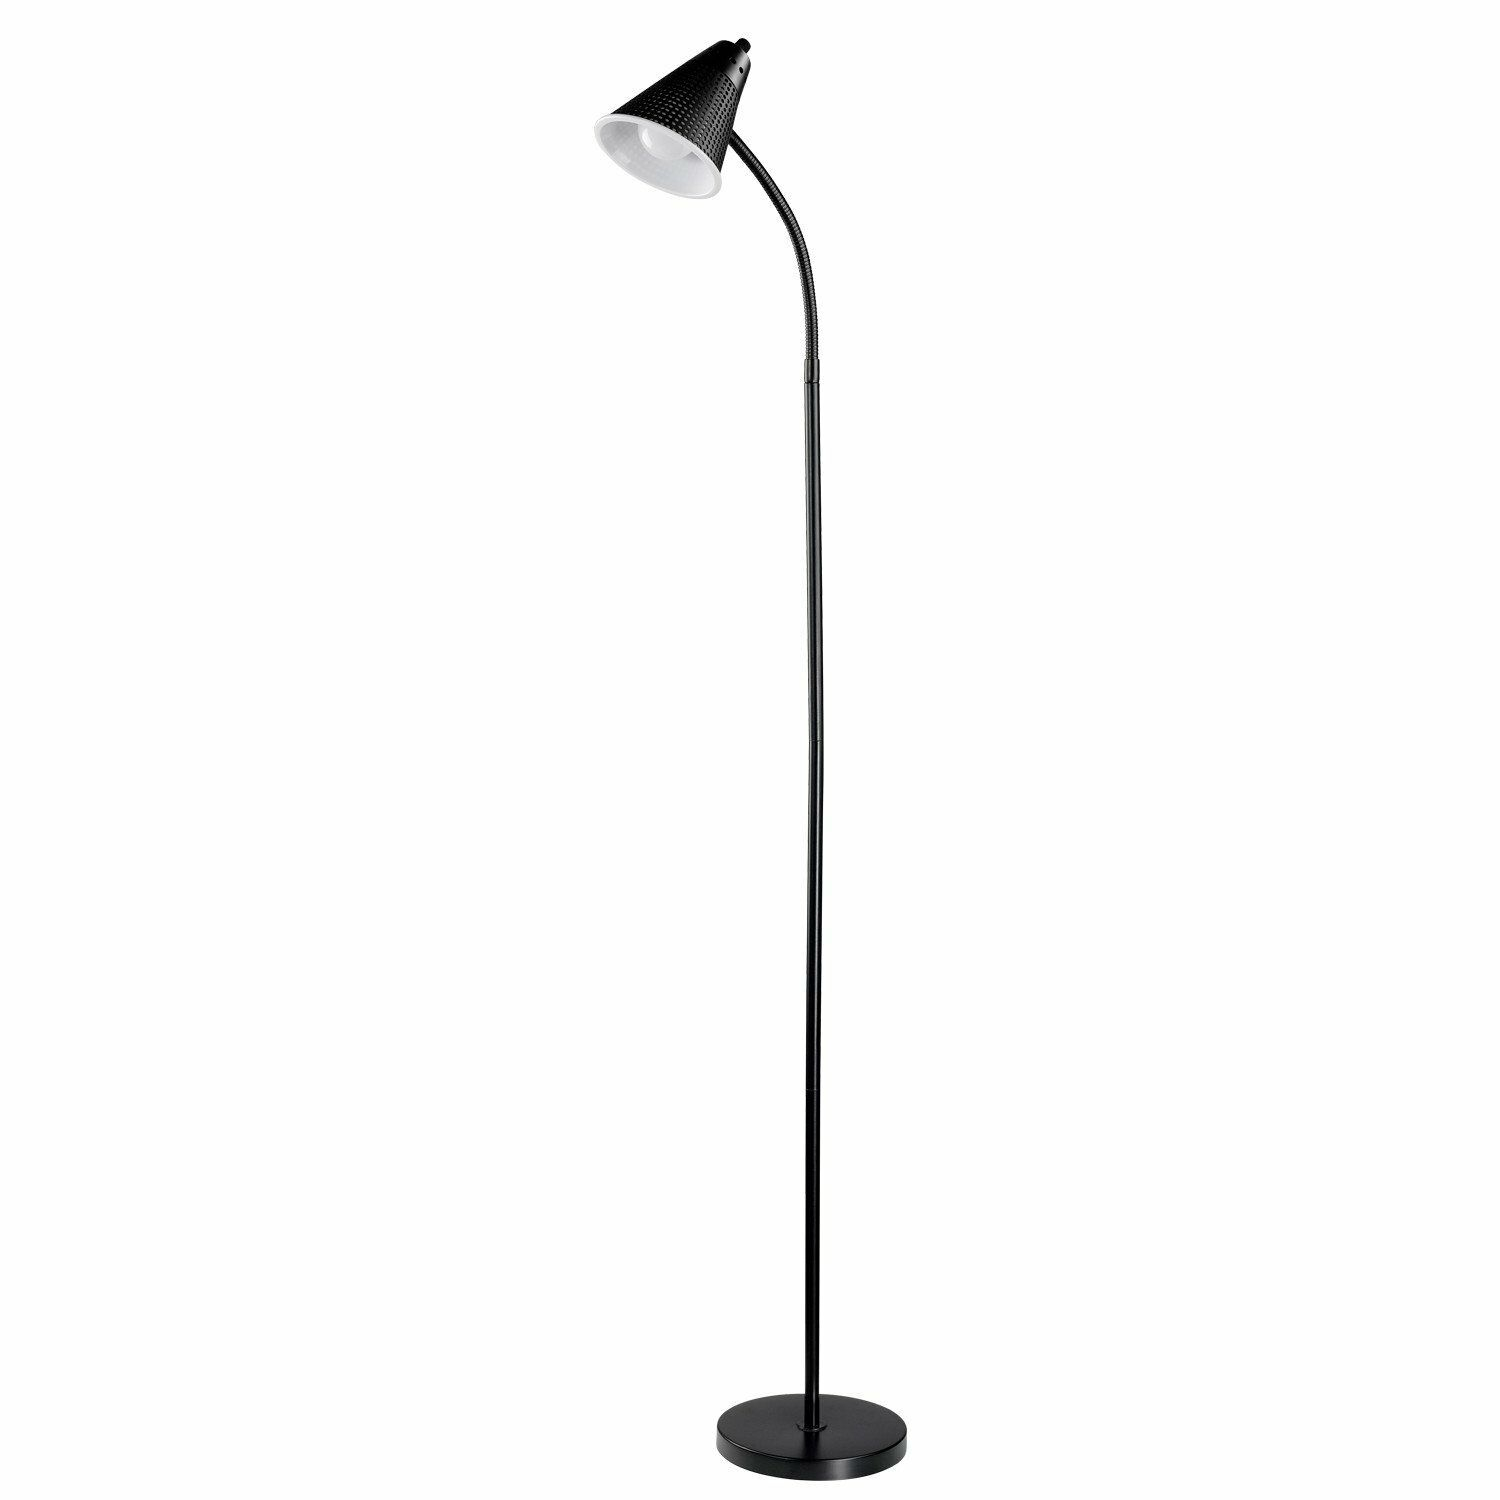 Led Reading Light Standing Floor Lamp Adjustable Gooseneck Energy Saving Black with regard to dimensions 1500 X 1500